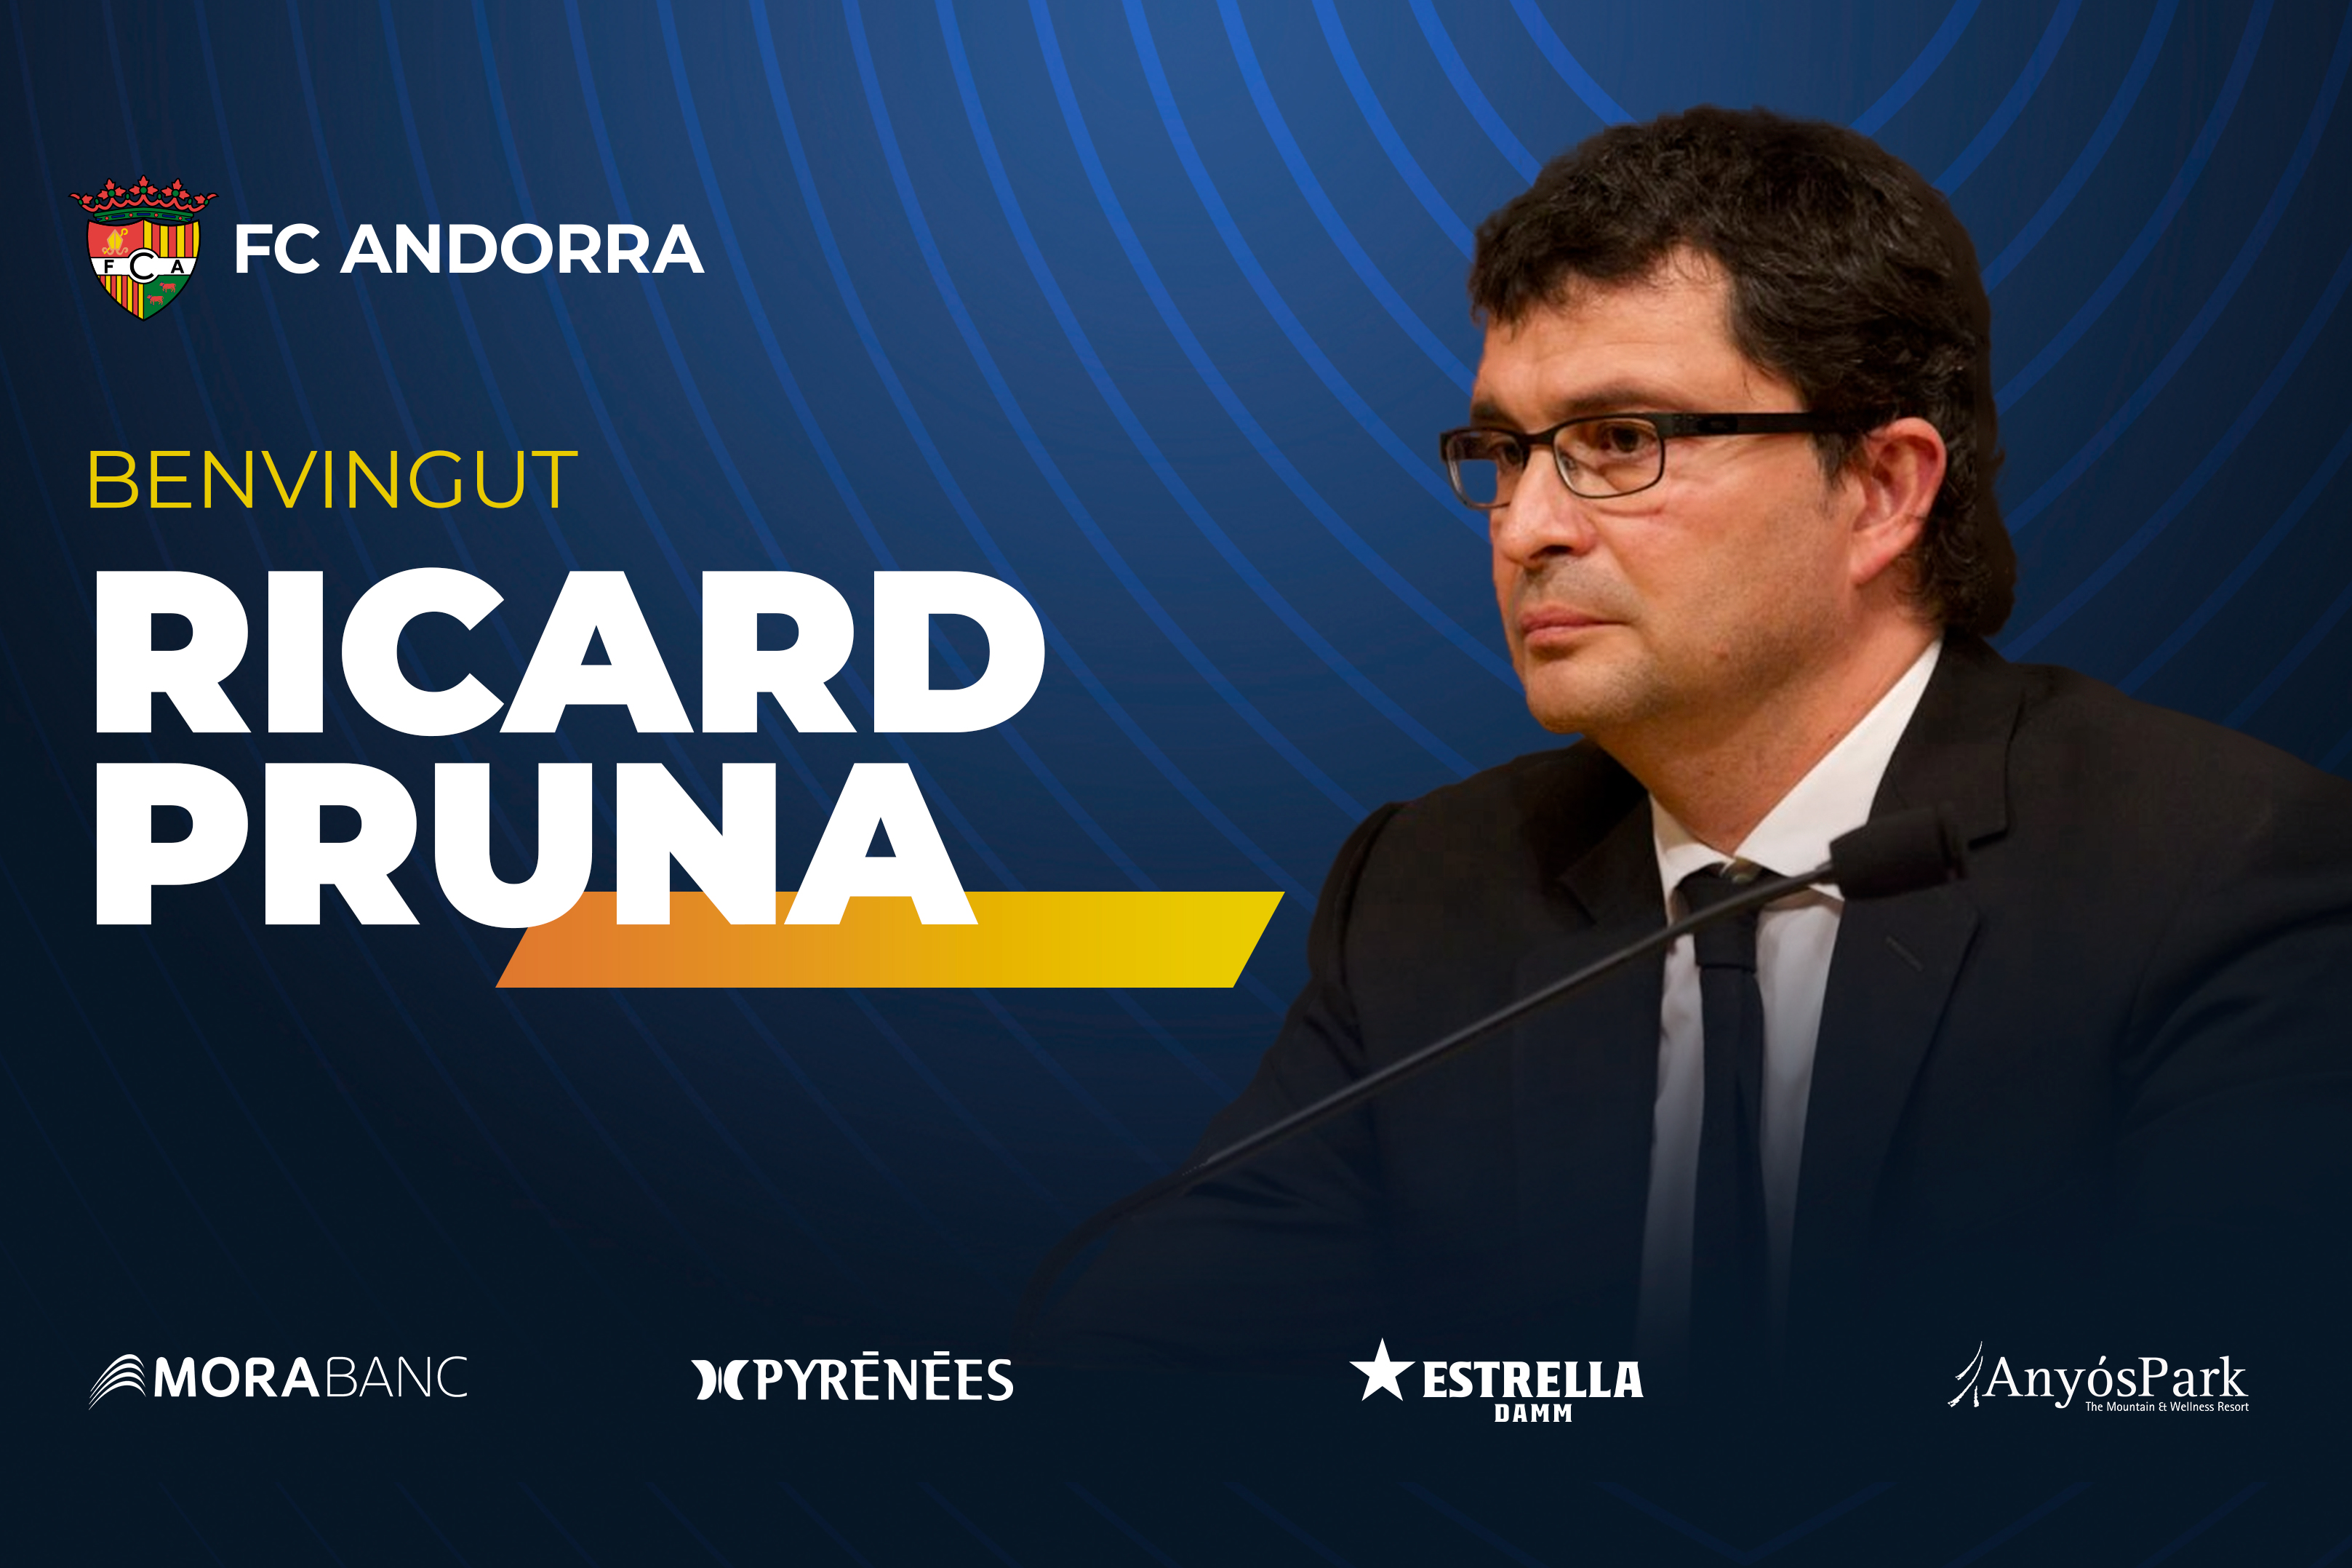 Ricard Pruna appointed medical advisor at FC Andorra